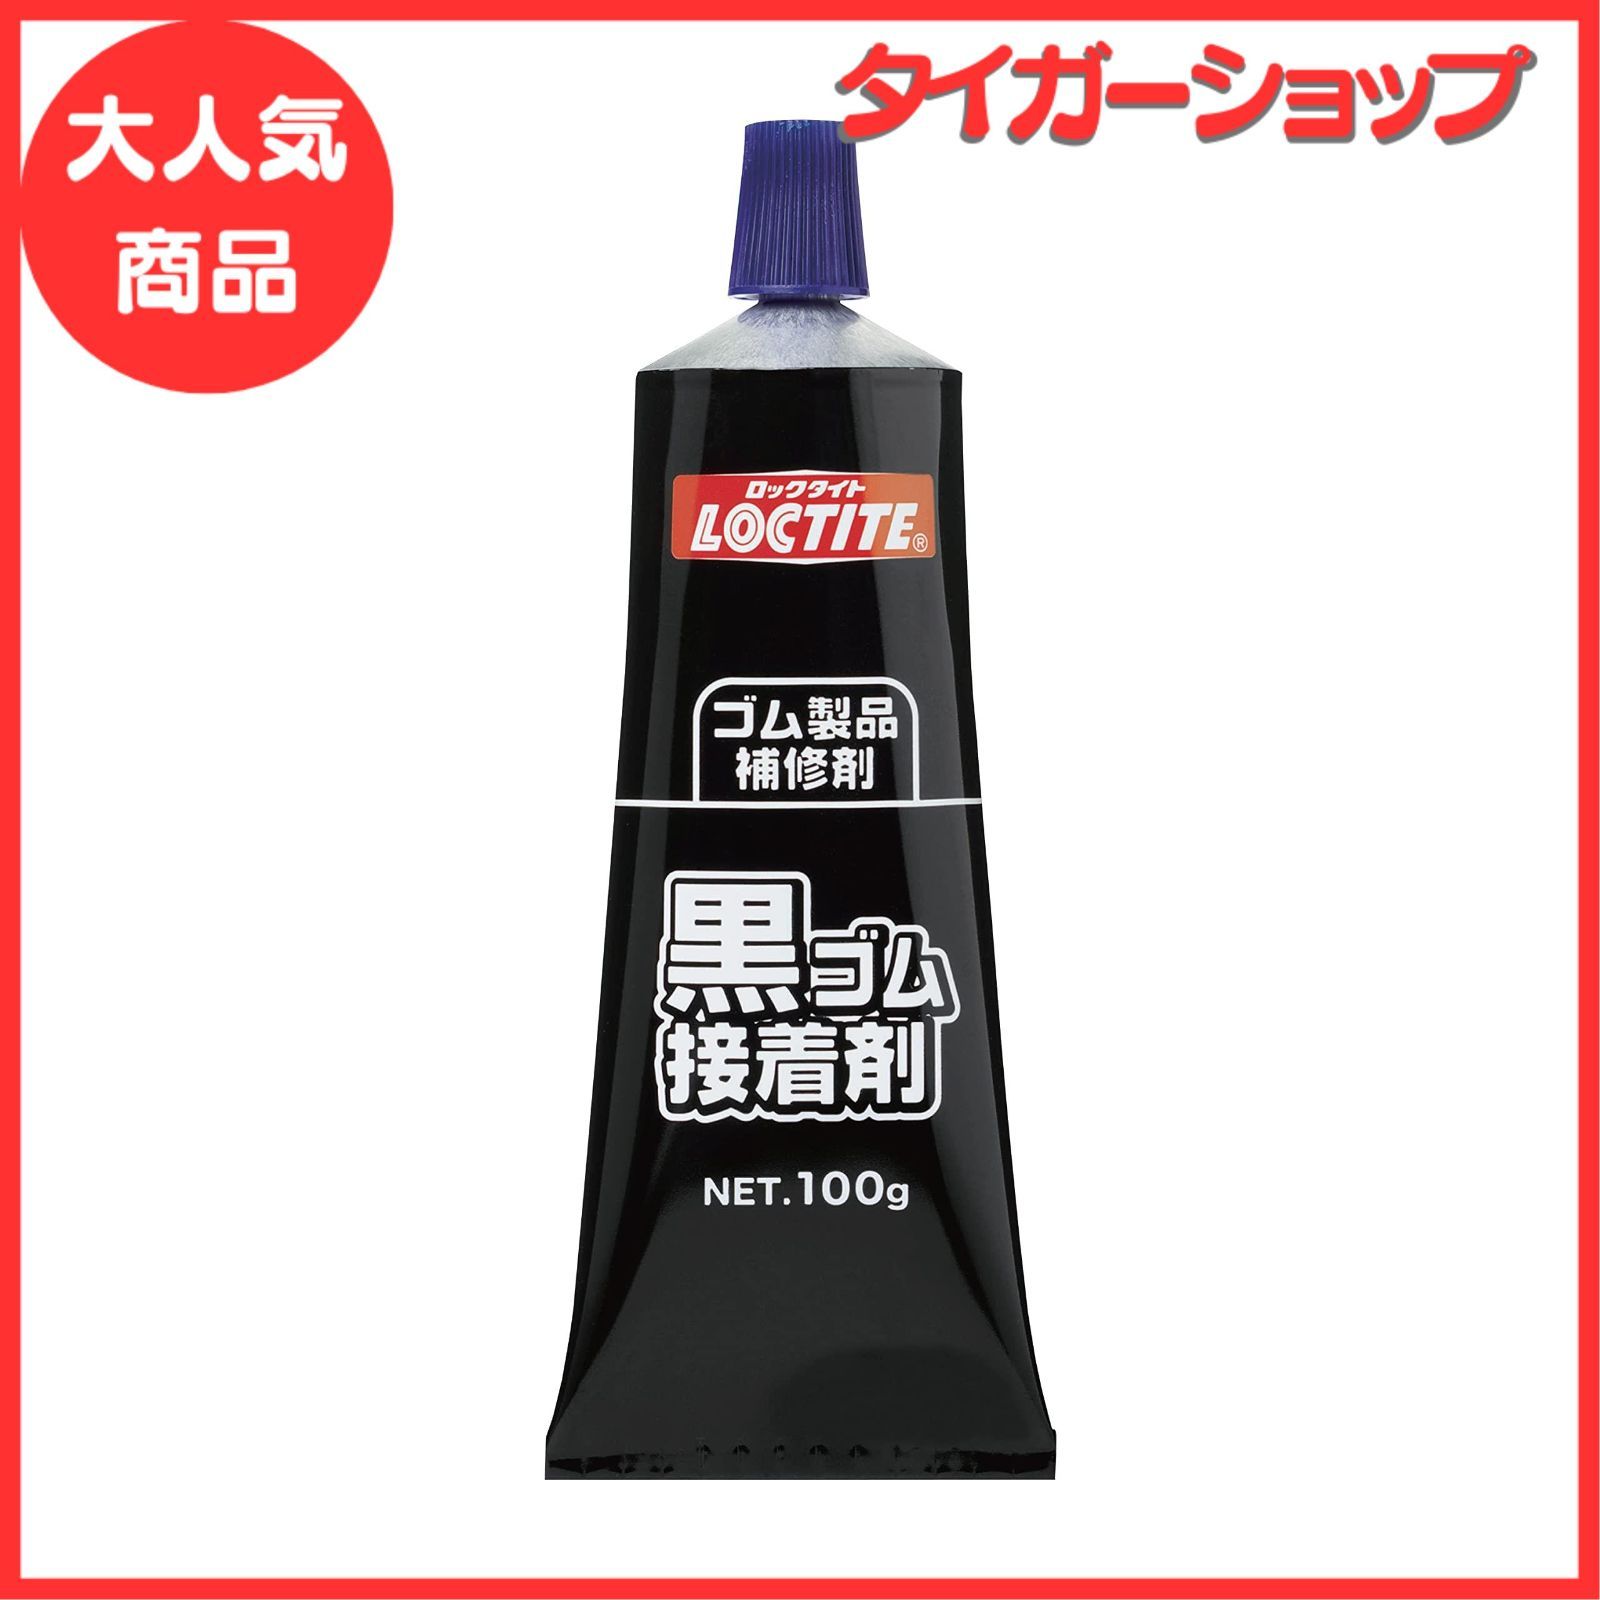 loctite(ロックタイト) 黒ゴム接着剤 100g dbr-100 10個入り - 接着剤